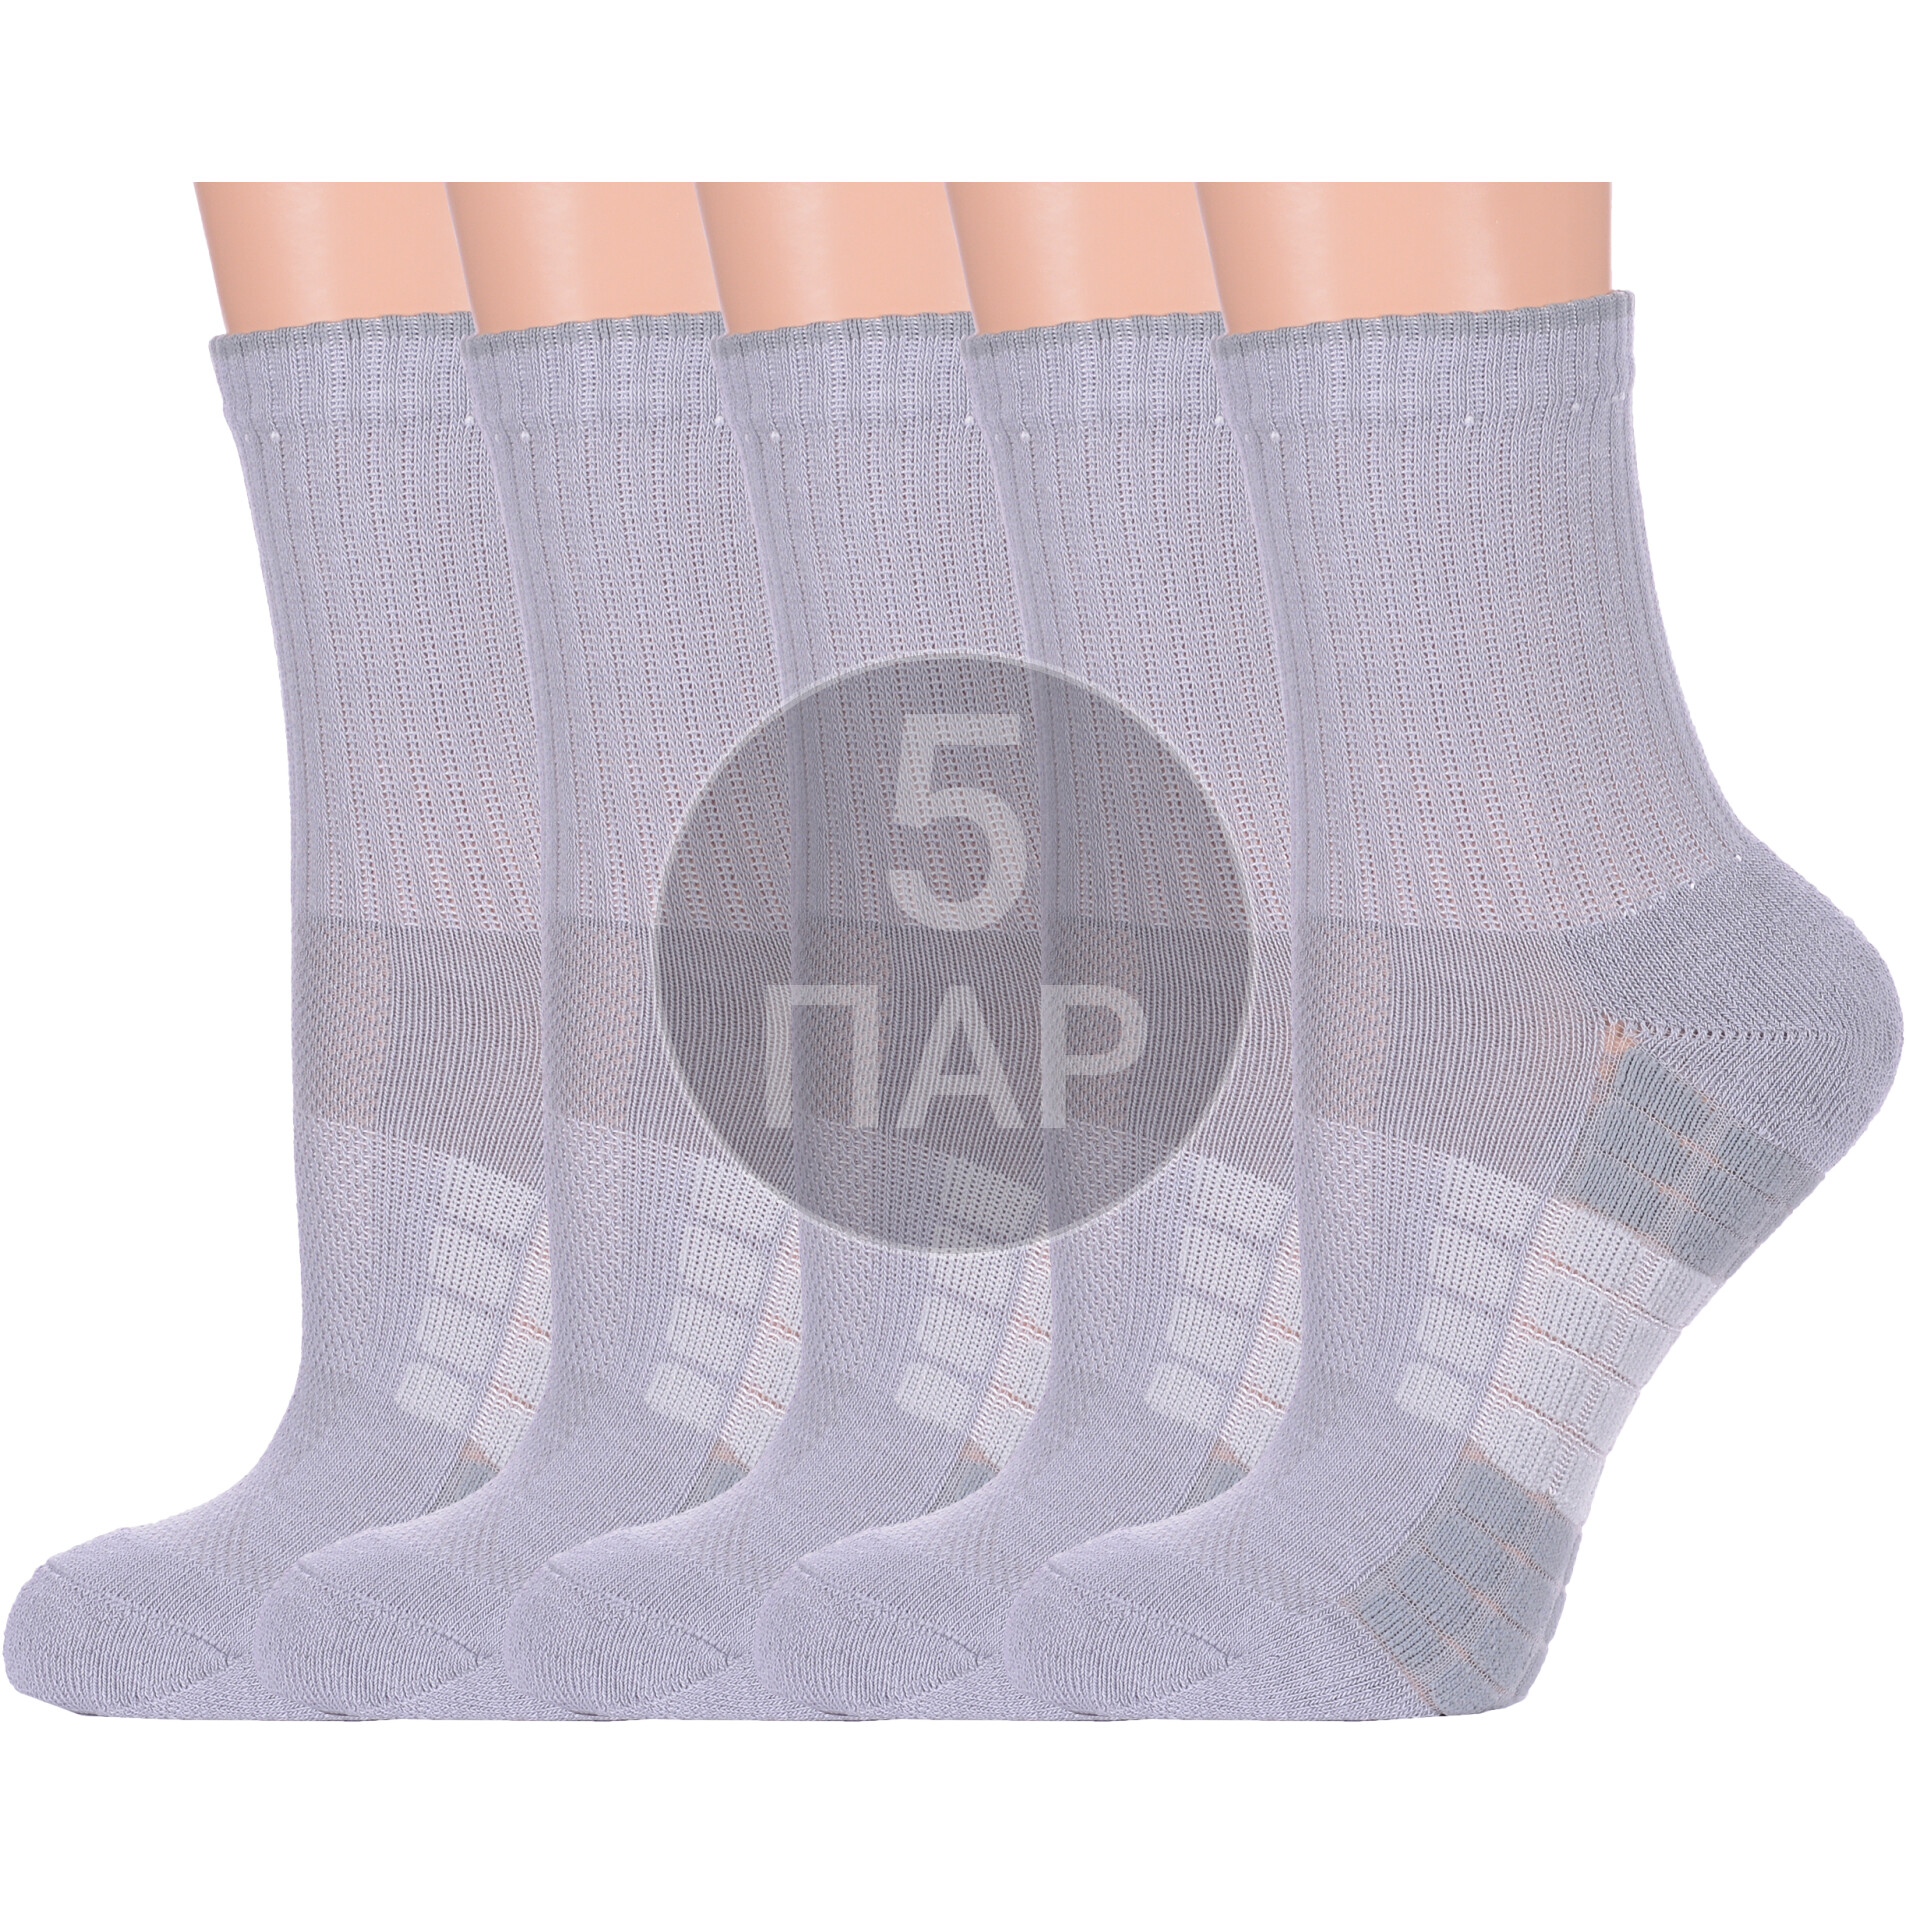 Комплект носков унисекс Para Socks 5-13S05 серый 27, 5 пар